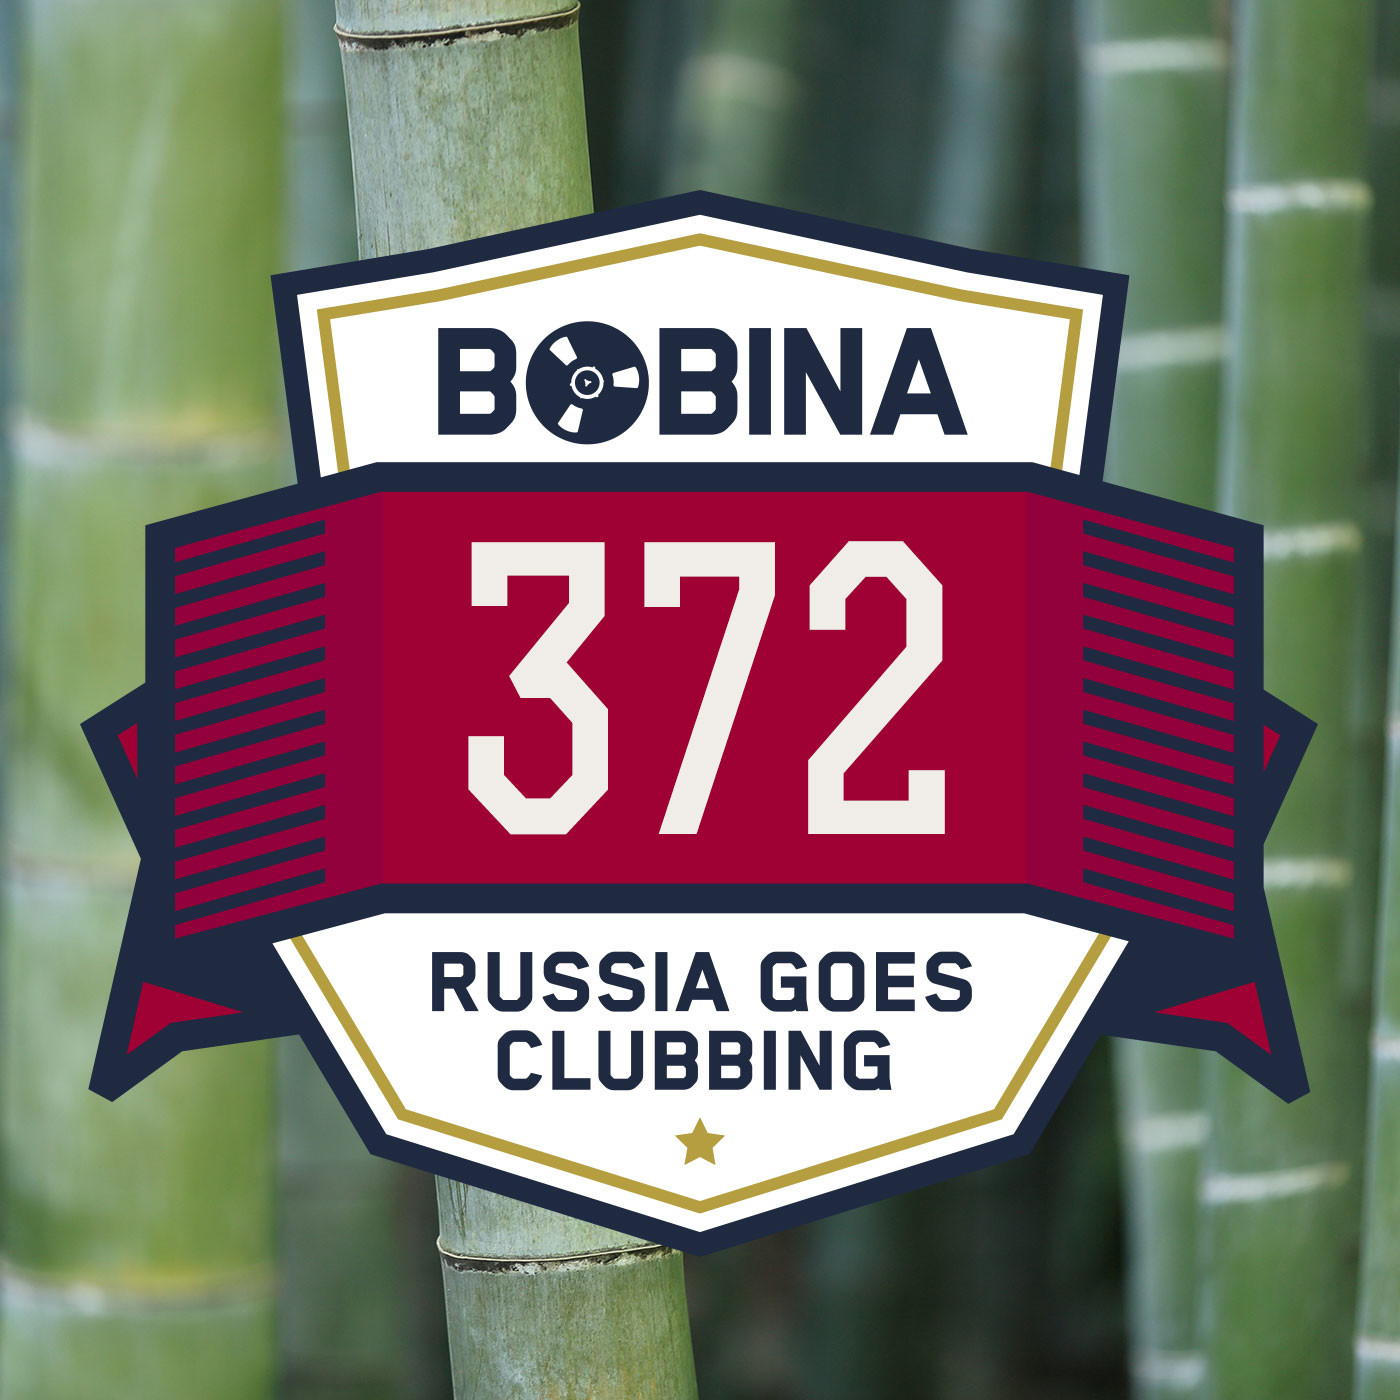 Nr. 372 Russia Goes Clubbing